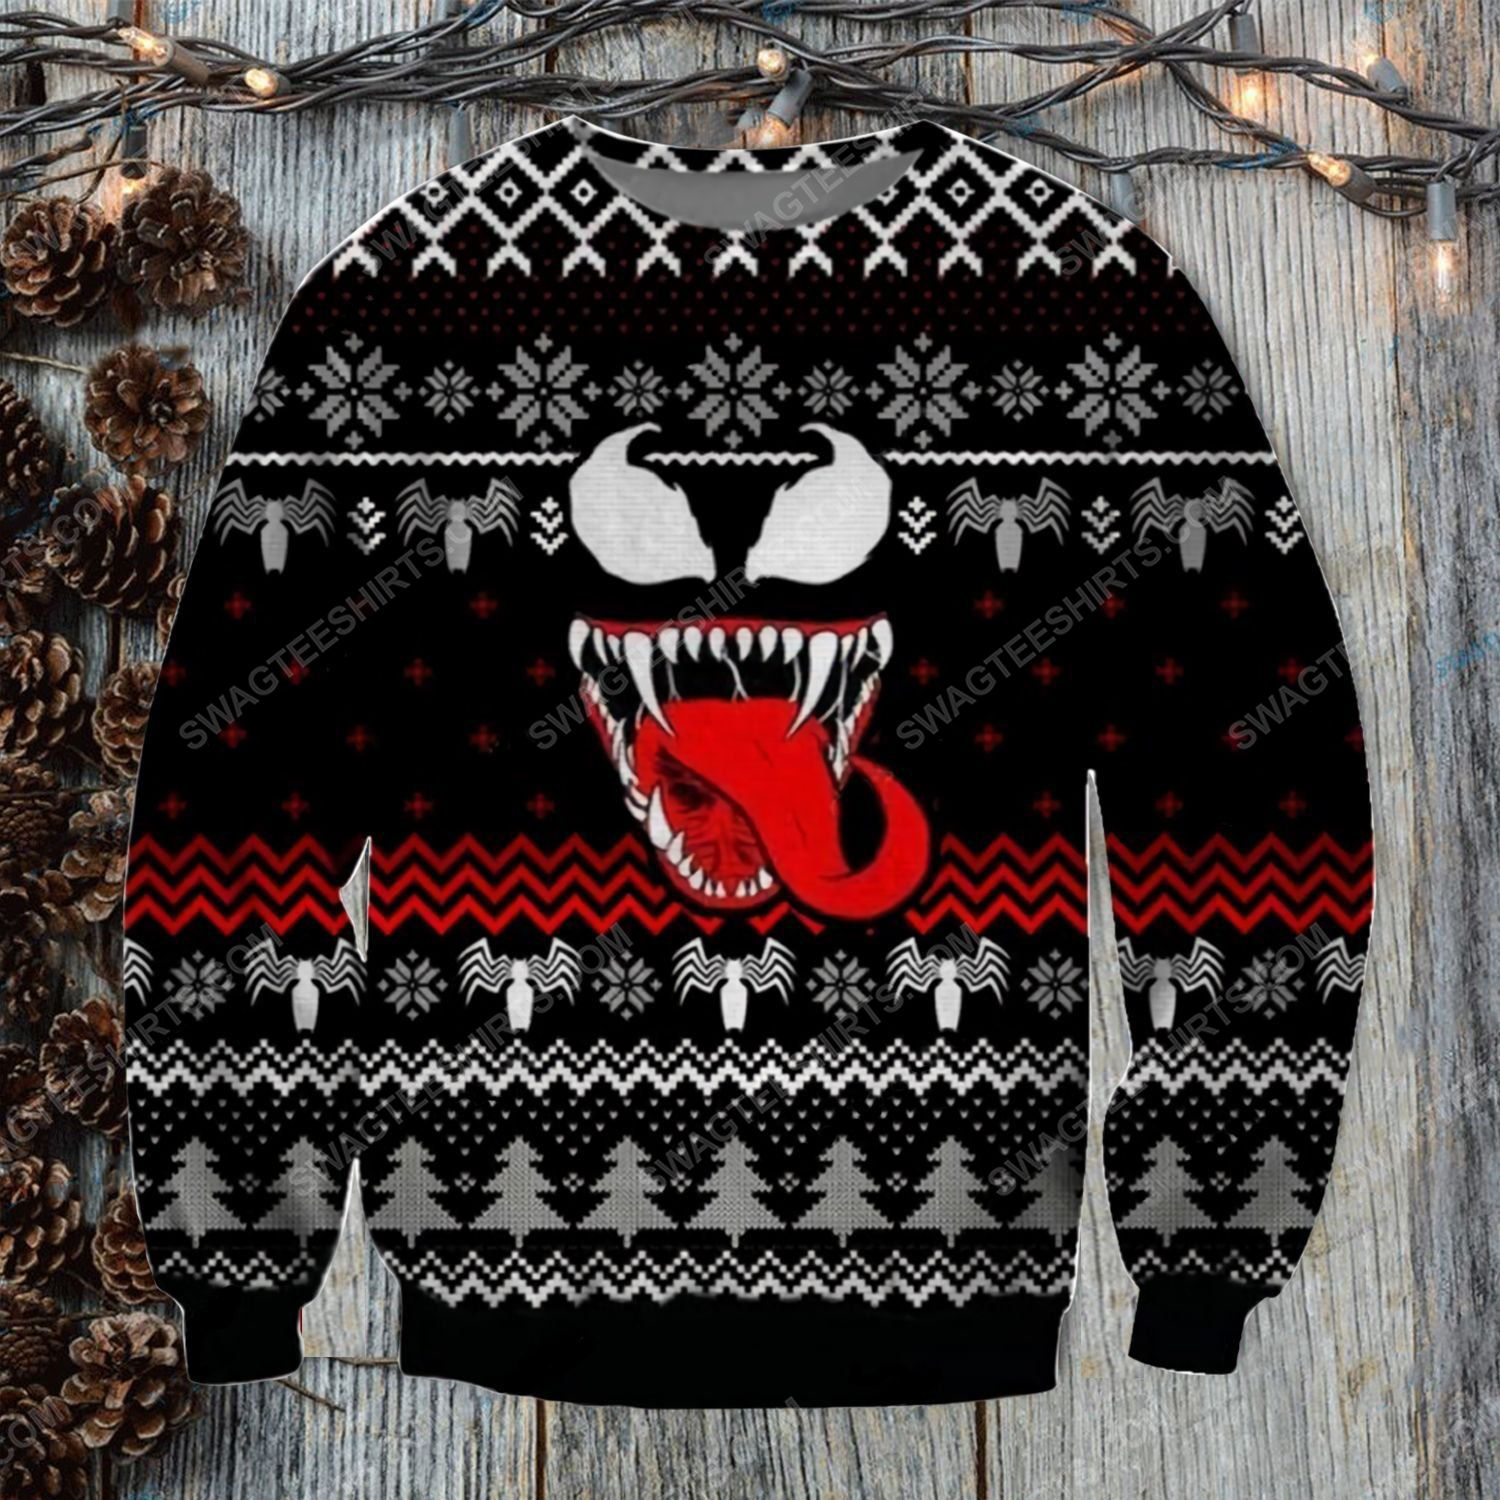 Spider man venom ugly christmas sweater - Copy (3)